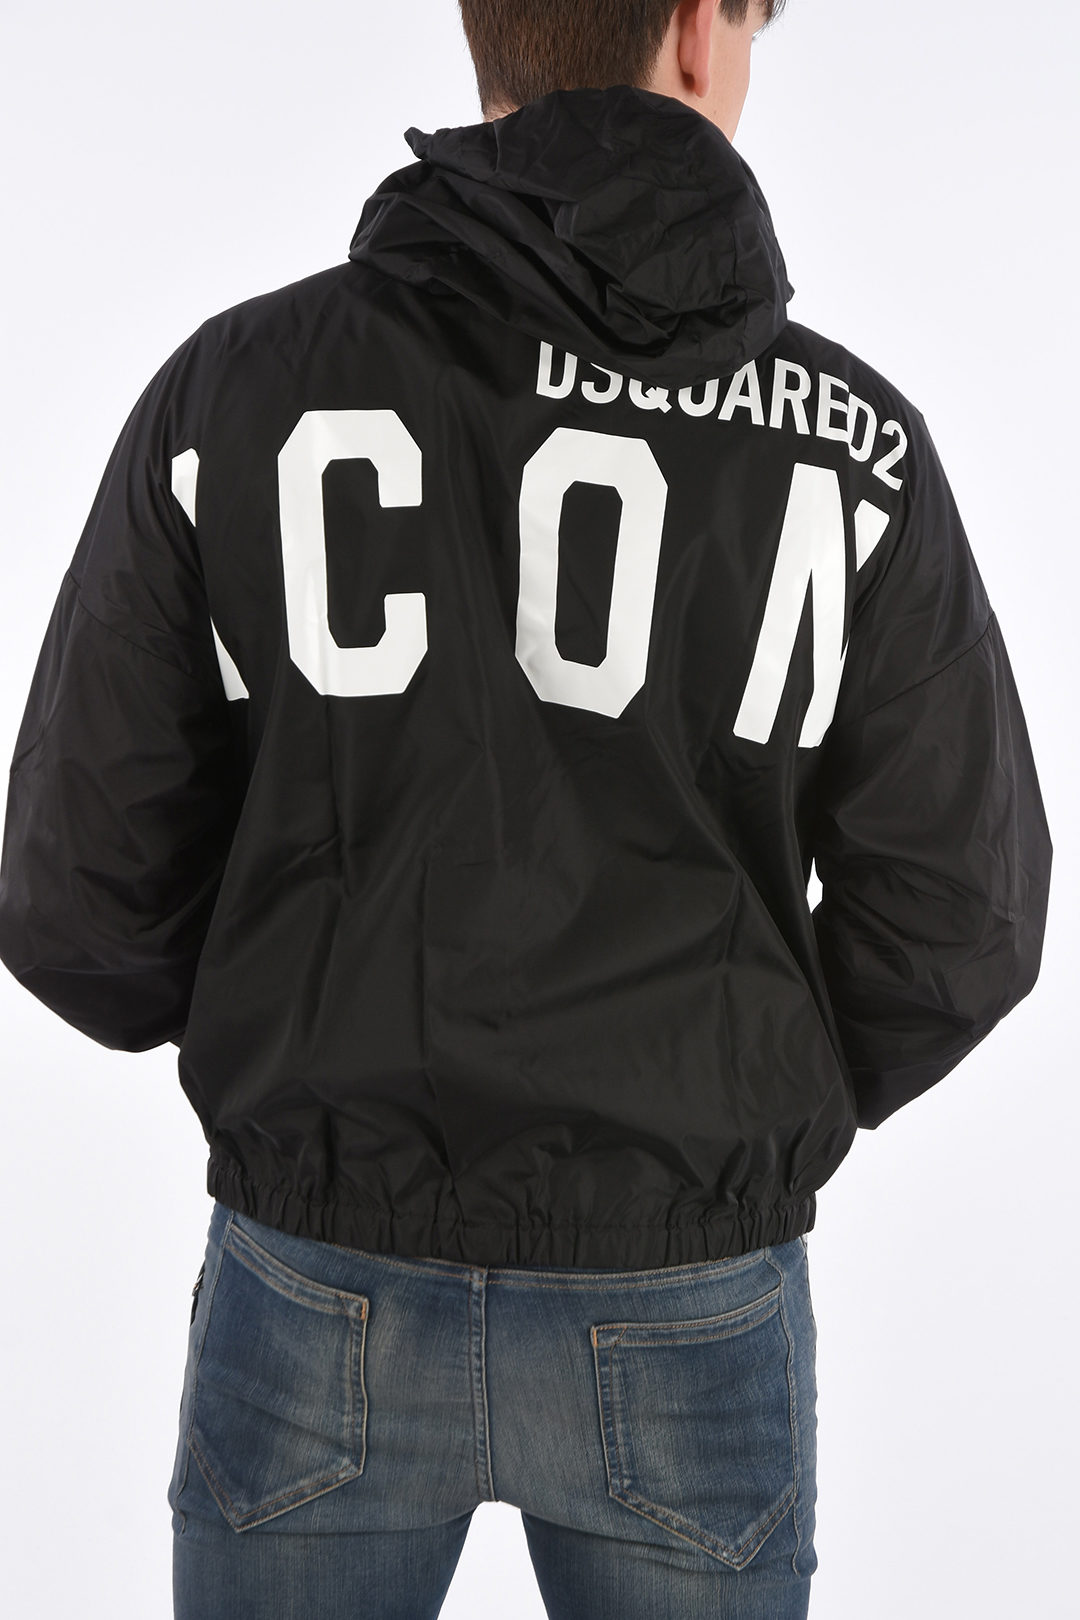 Dsquared2 ICON Printed Logo Jacket men - Glamood Outlet